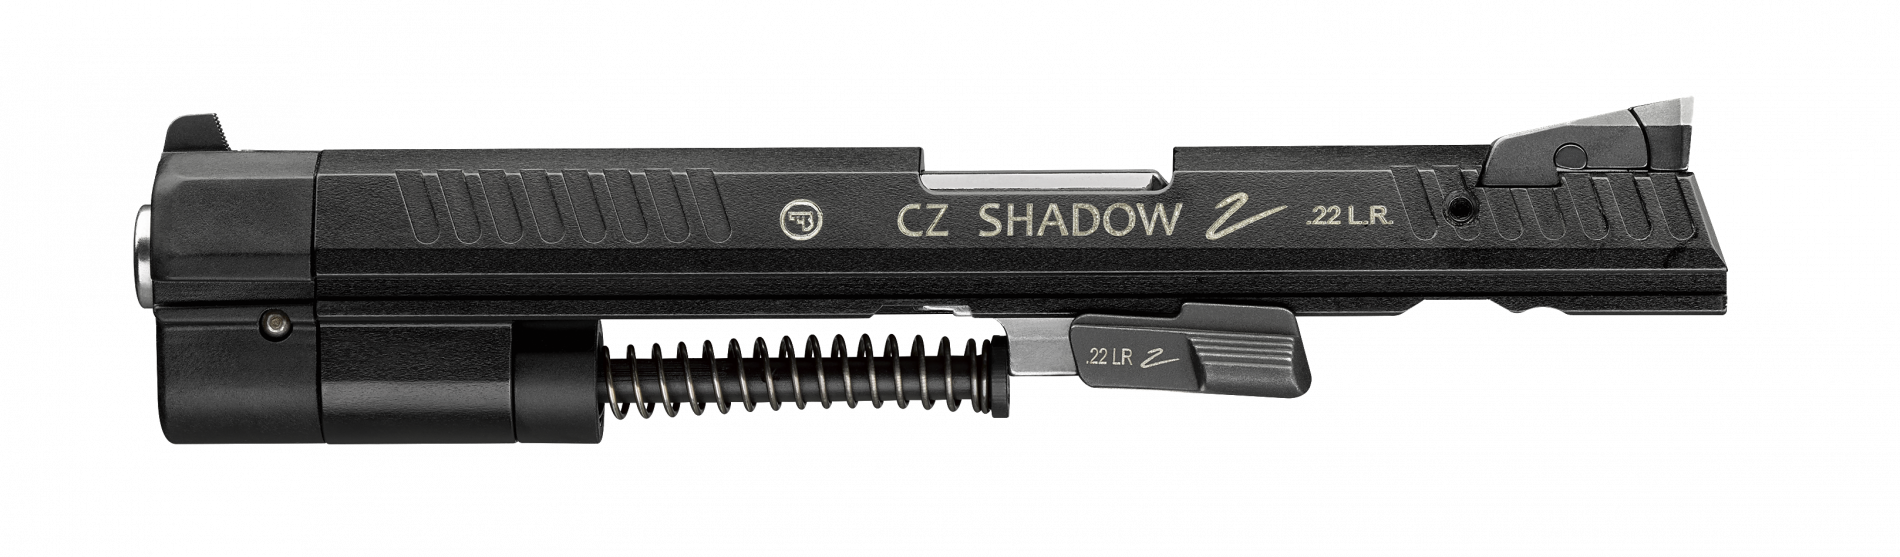 CZ shadow 2 22LR